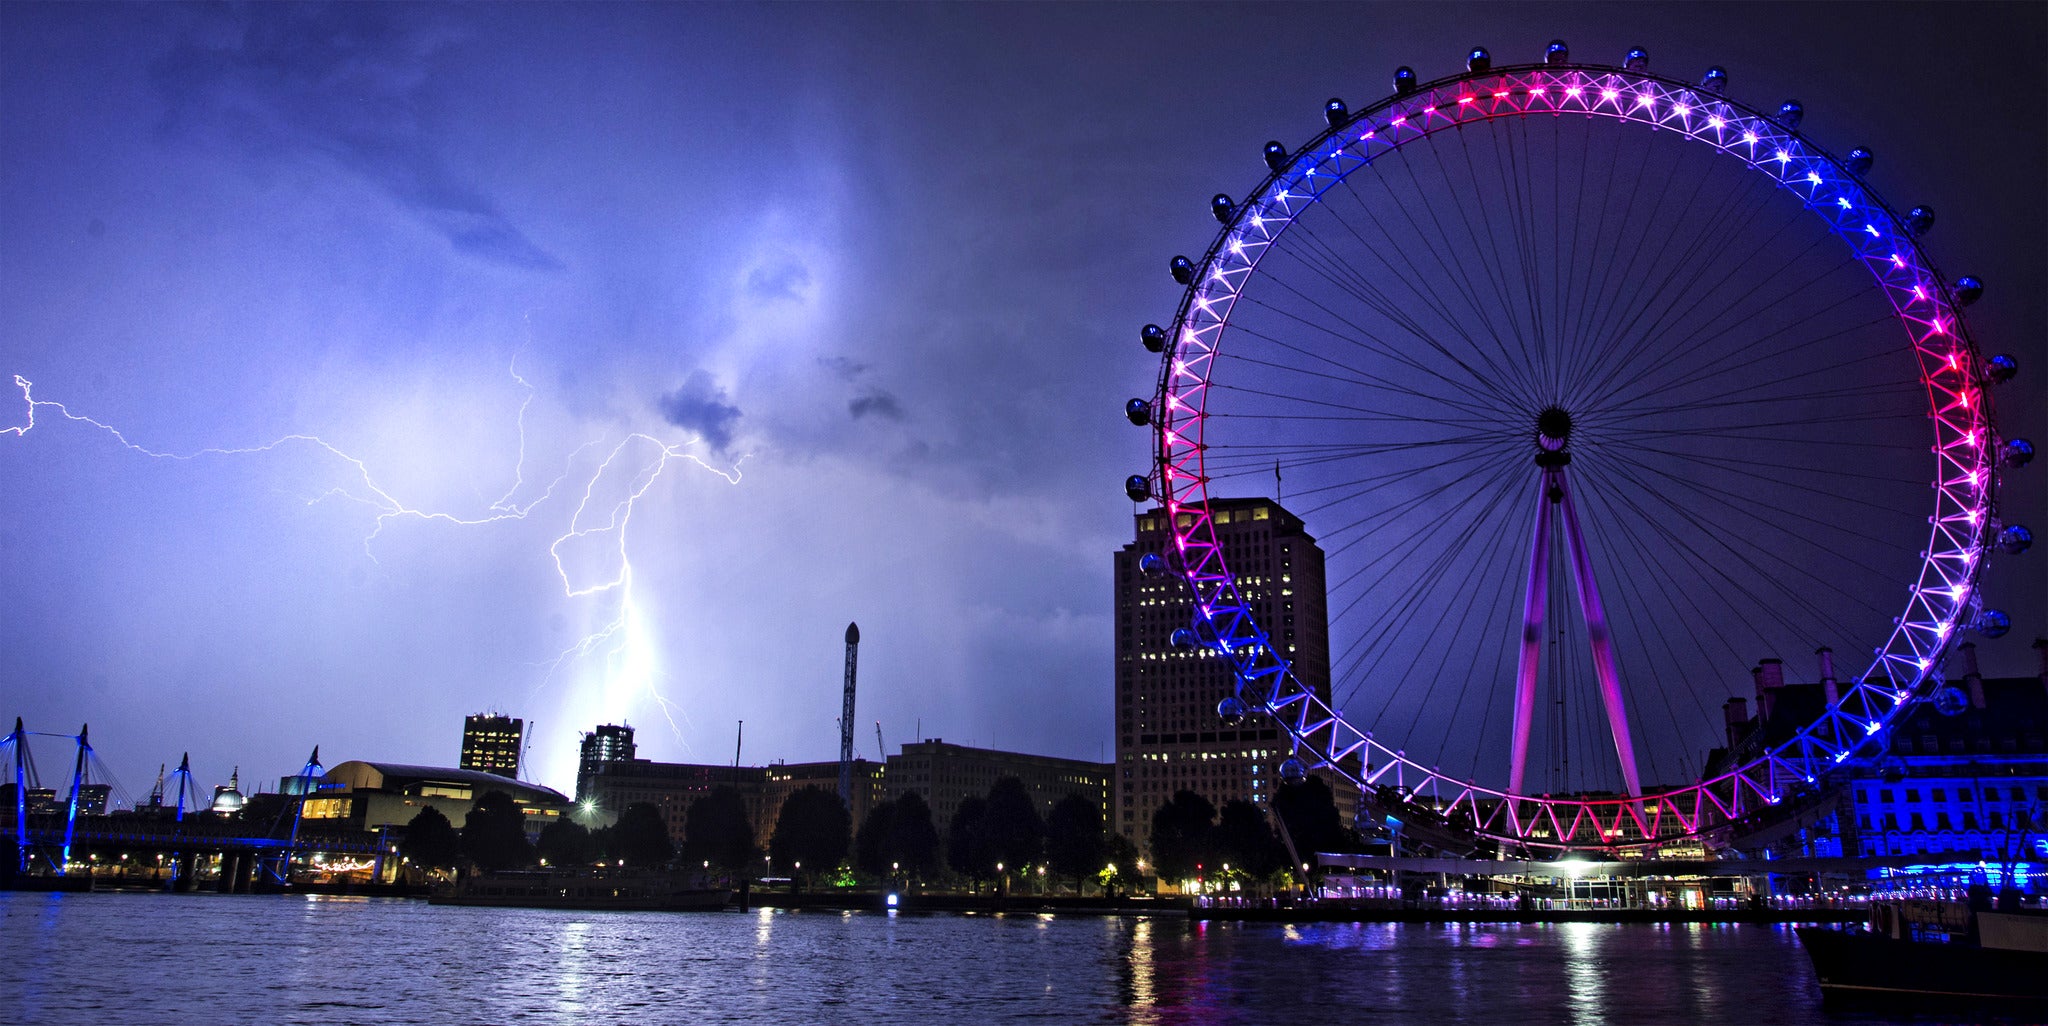 Lightning strikes behind The London Eye